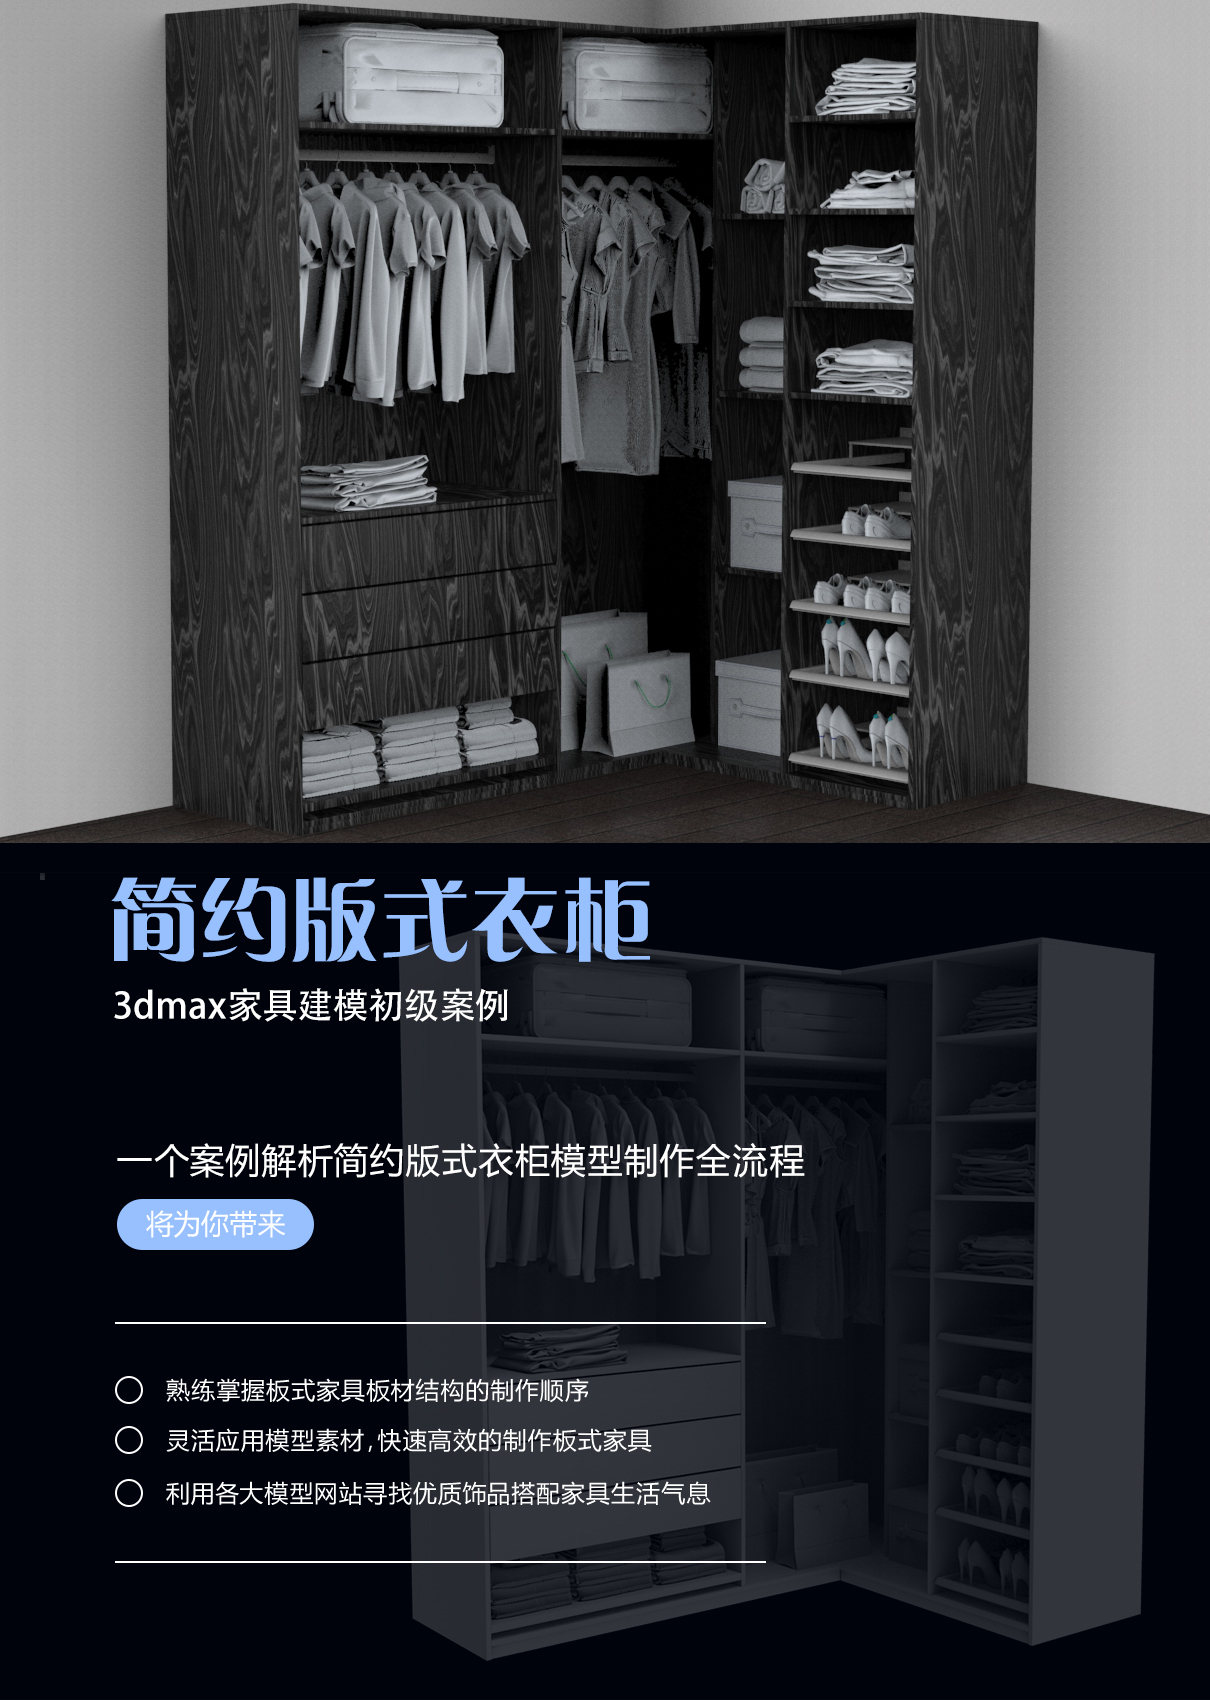 3dmax现代版式衣柜制作